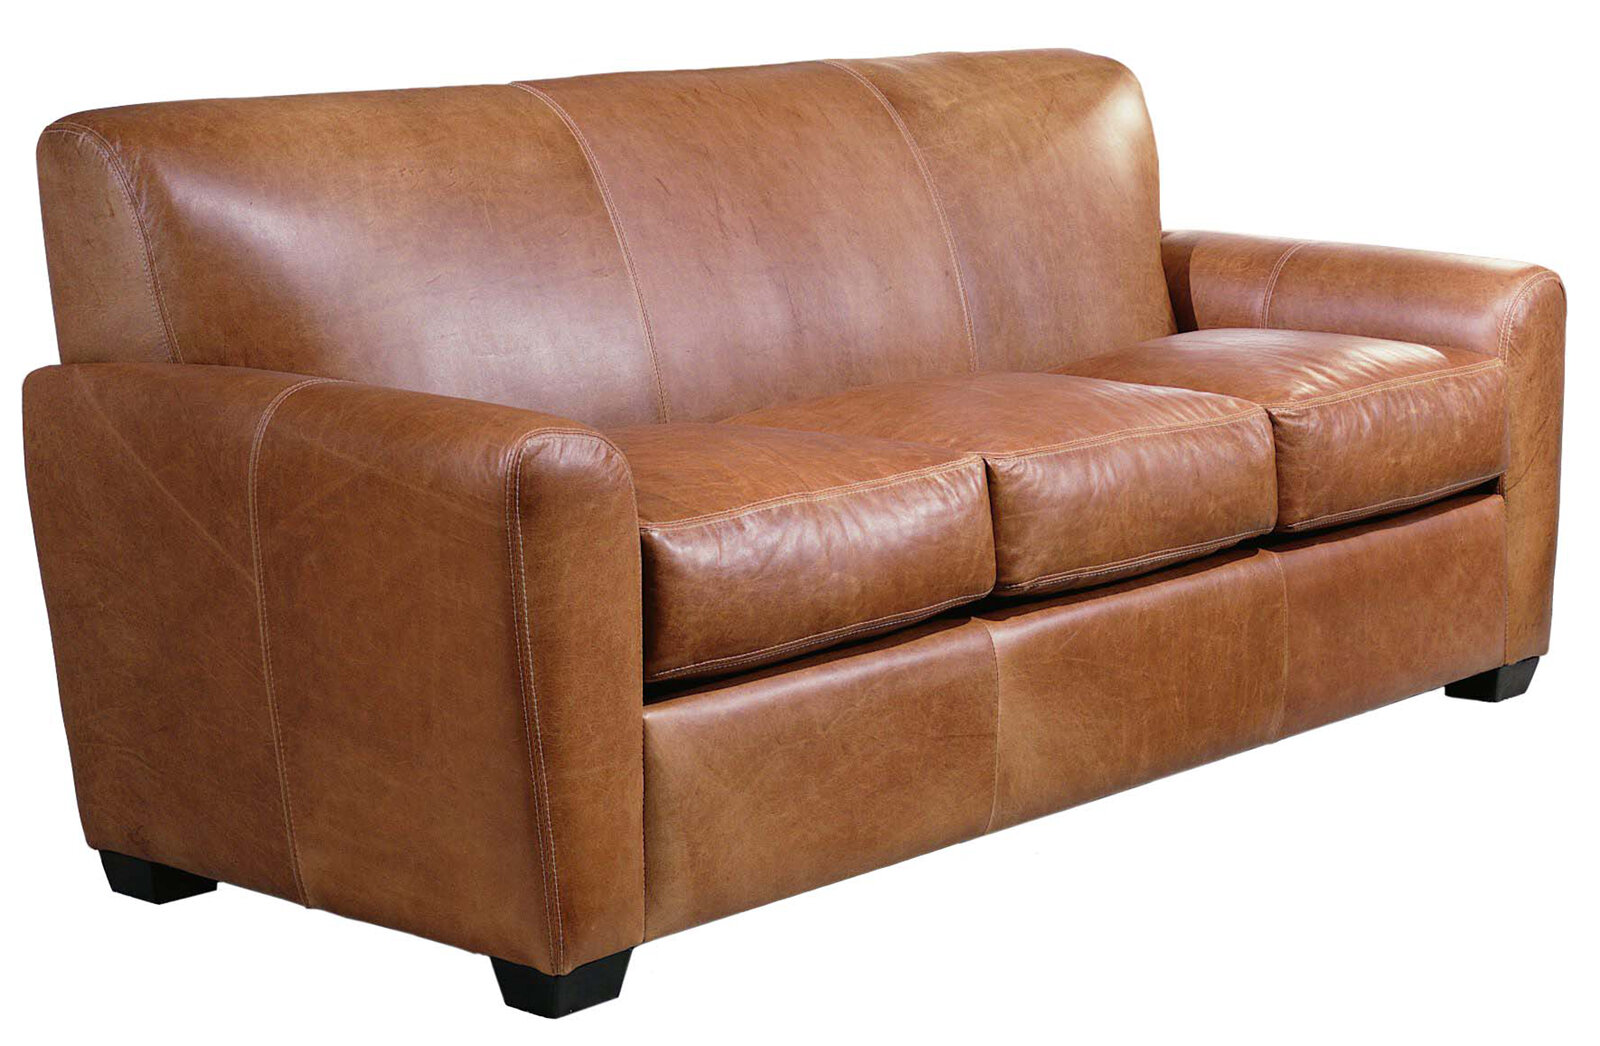 jackson leather sleeper sofa by omnia leather